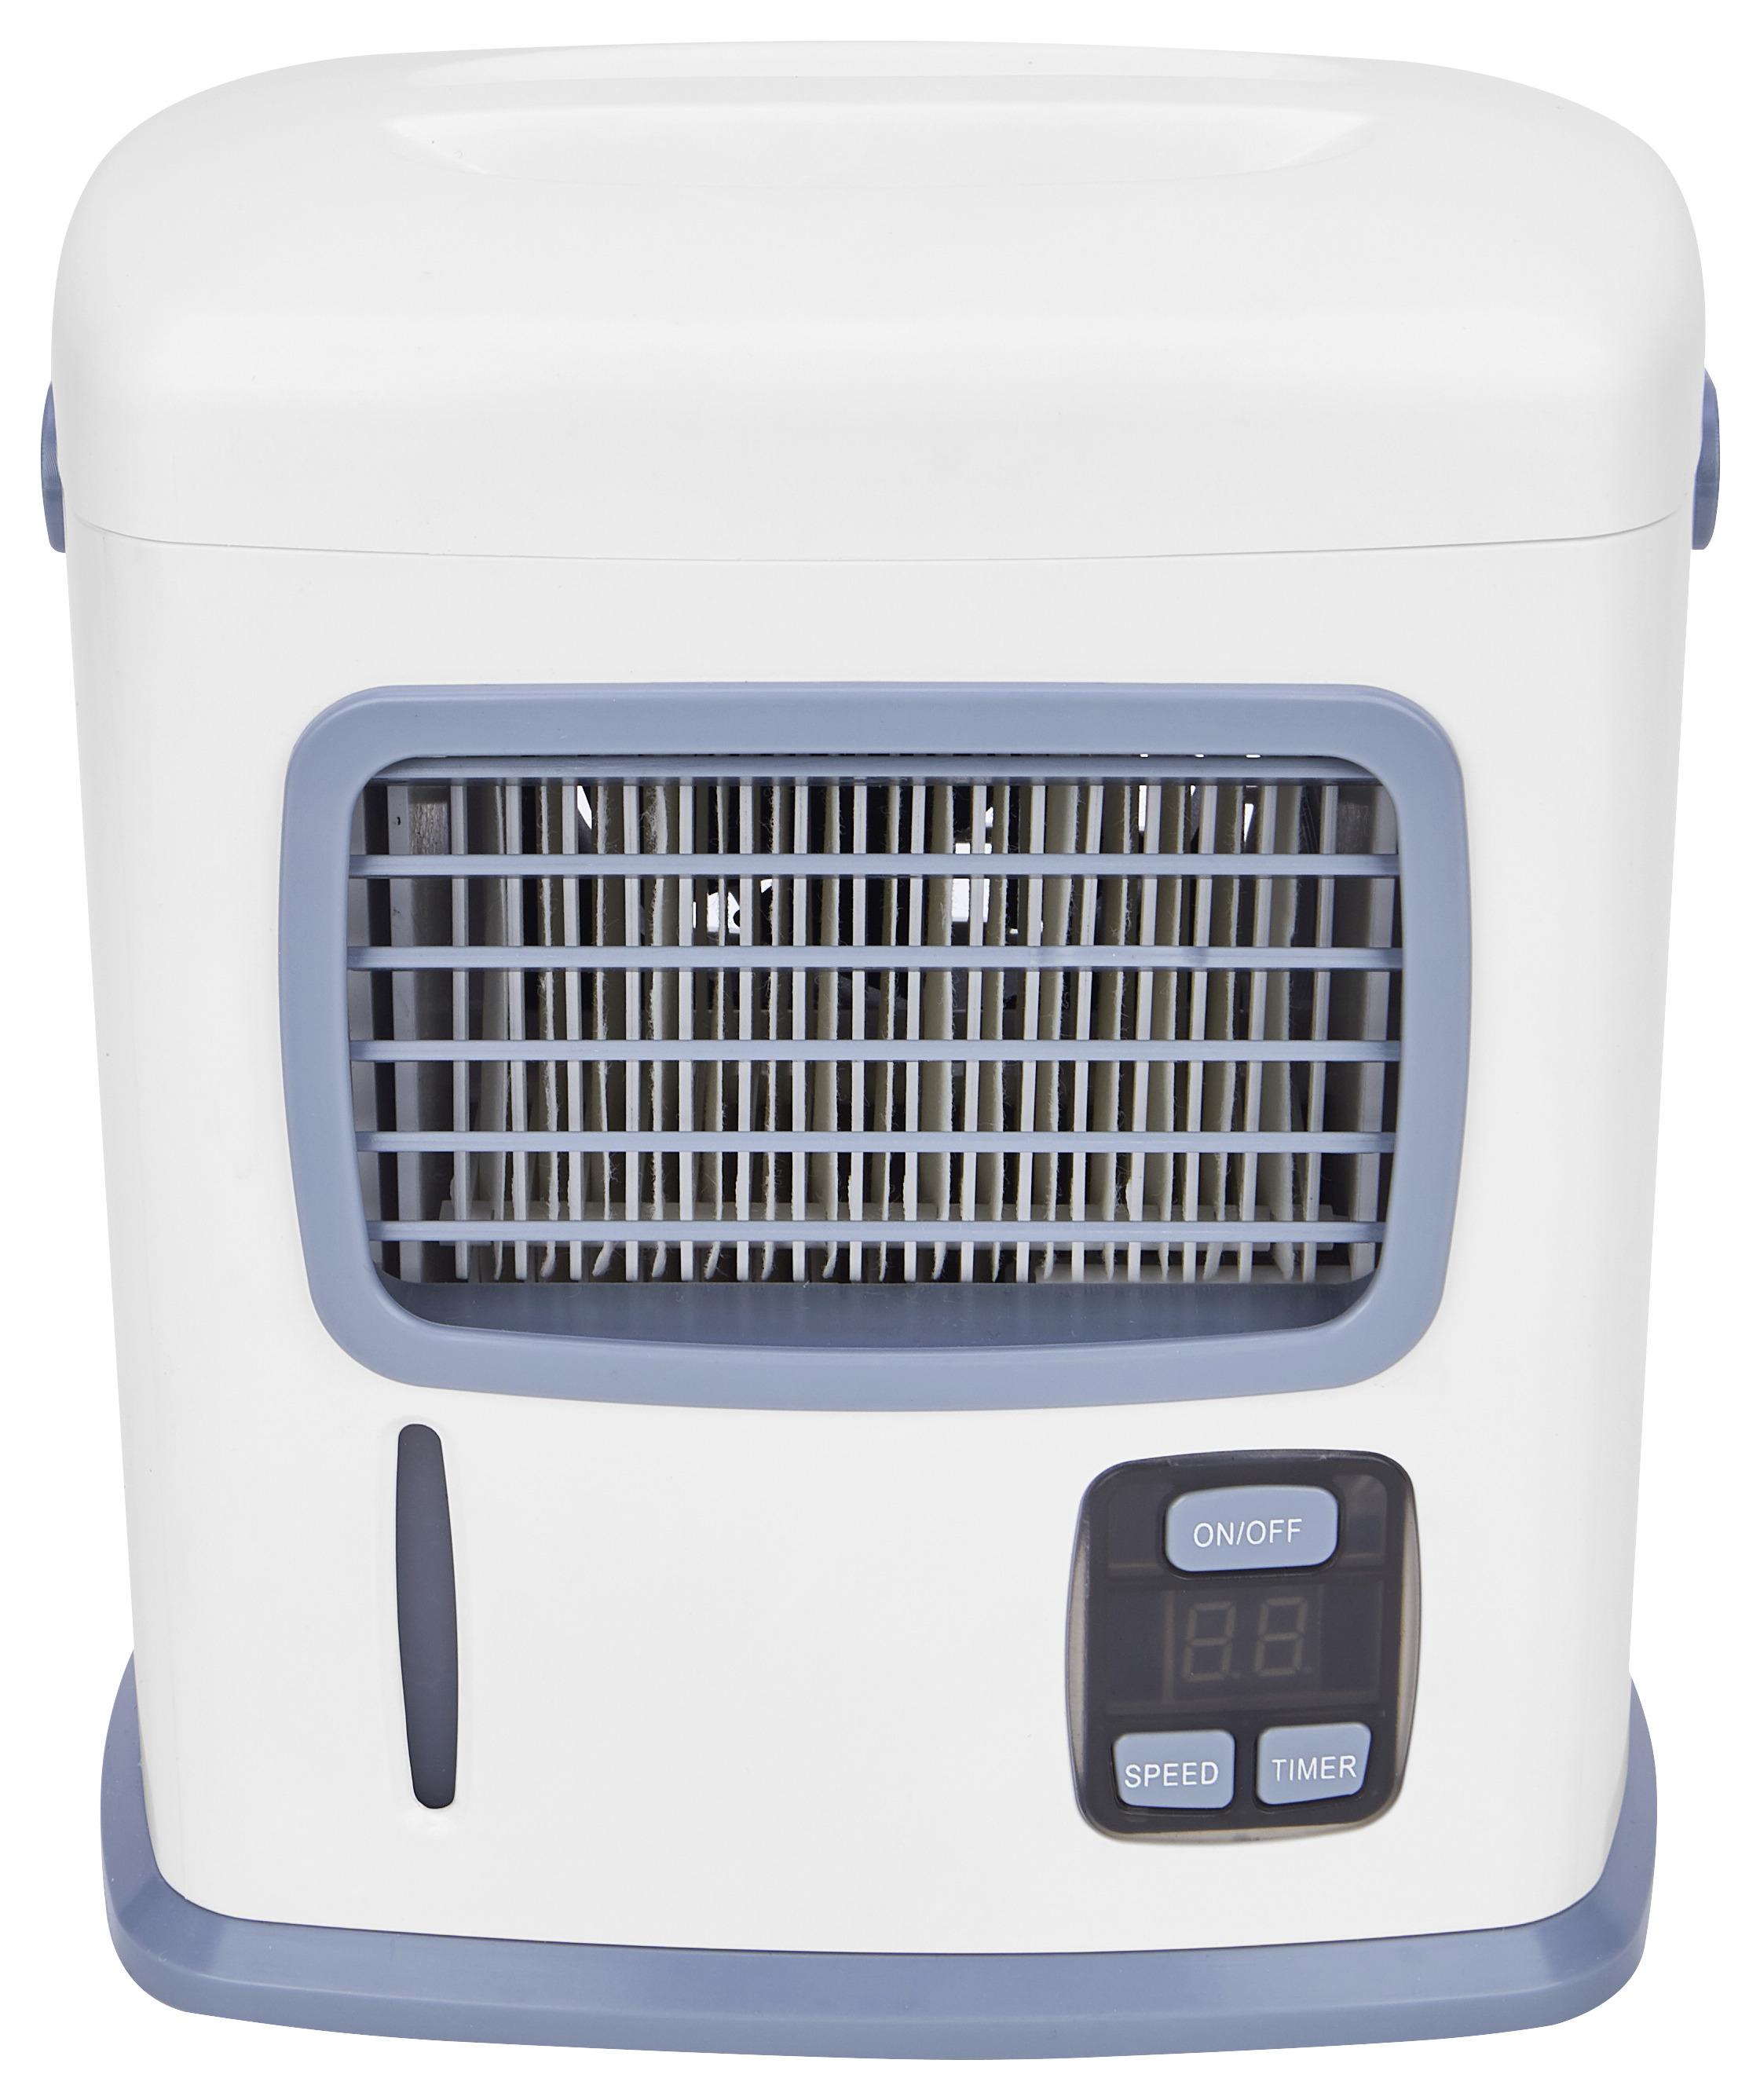 Luftkühler Tolly max. 3-5 Watt - Weiß/Grau, Kunststoff (17,7/19,5/12,35cm) - Insido